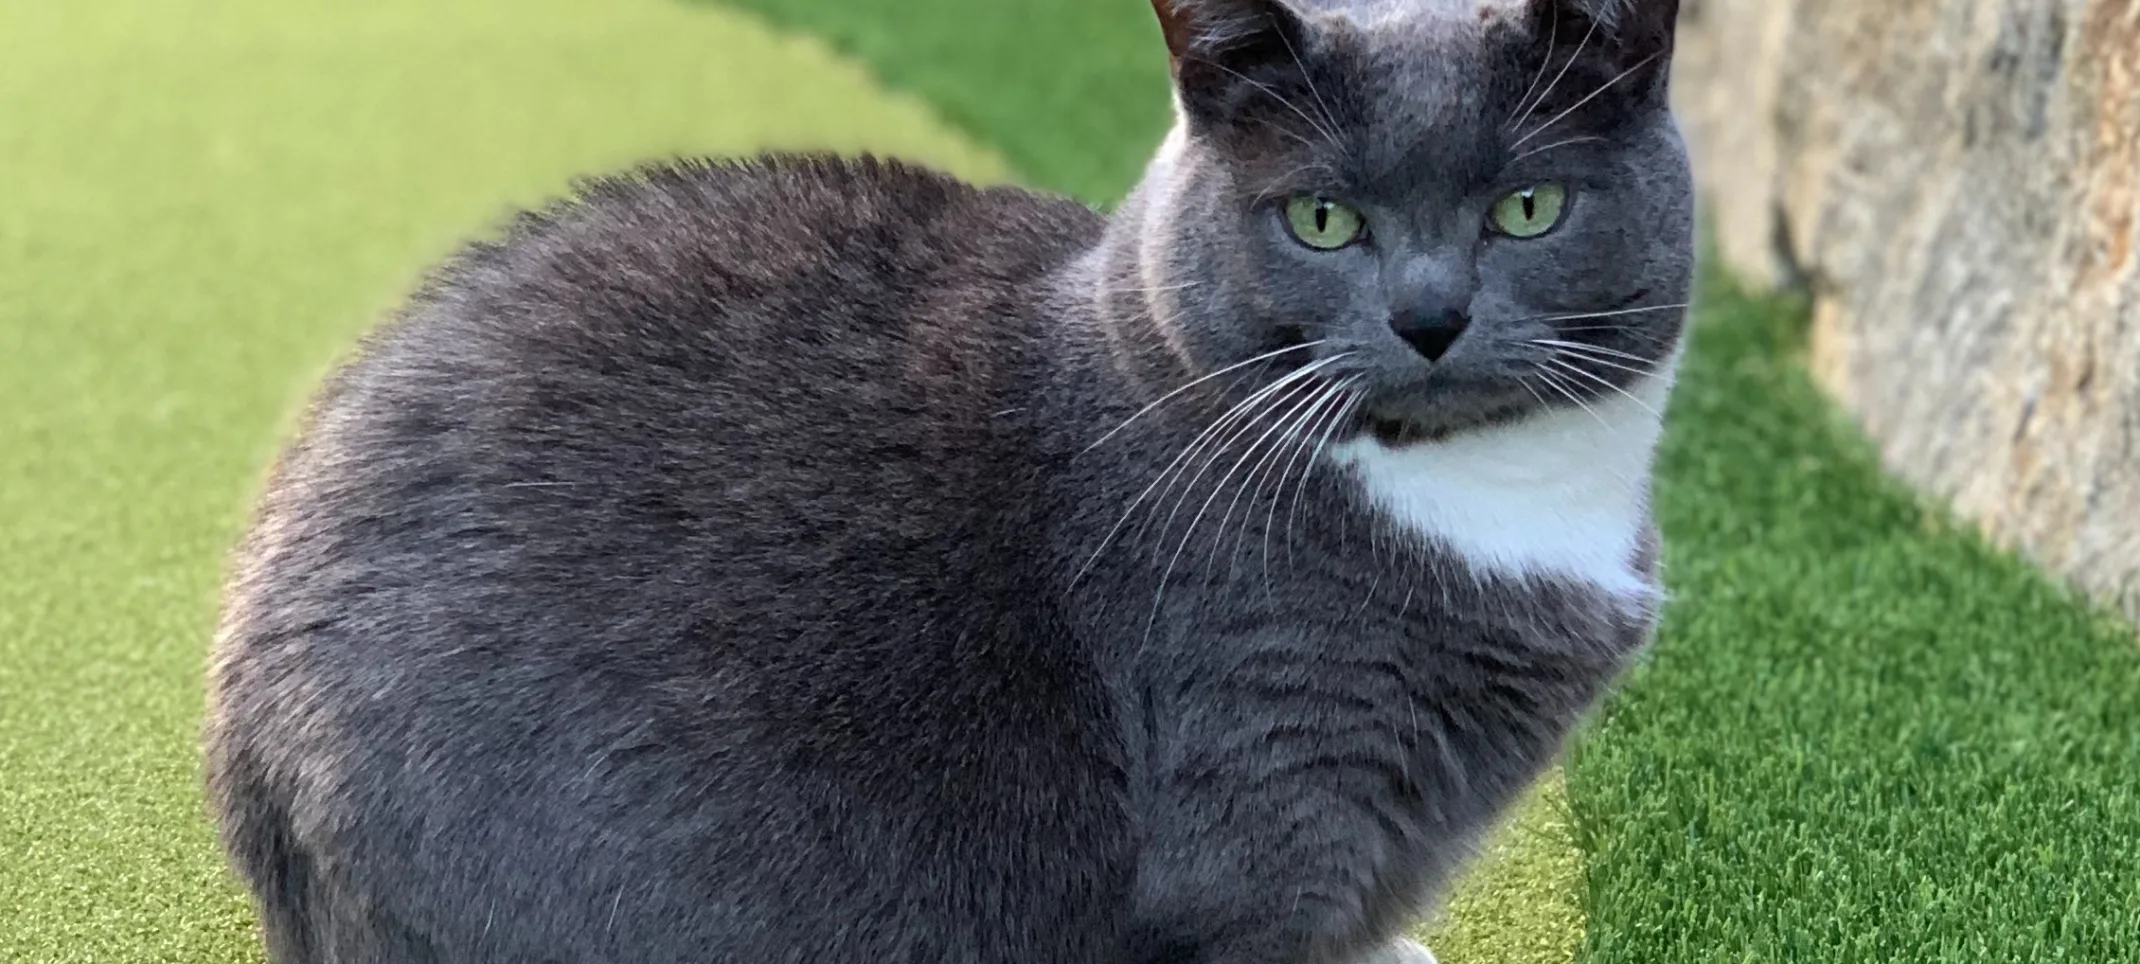 Cat sitting on artificial grass